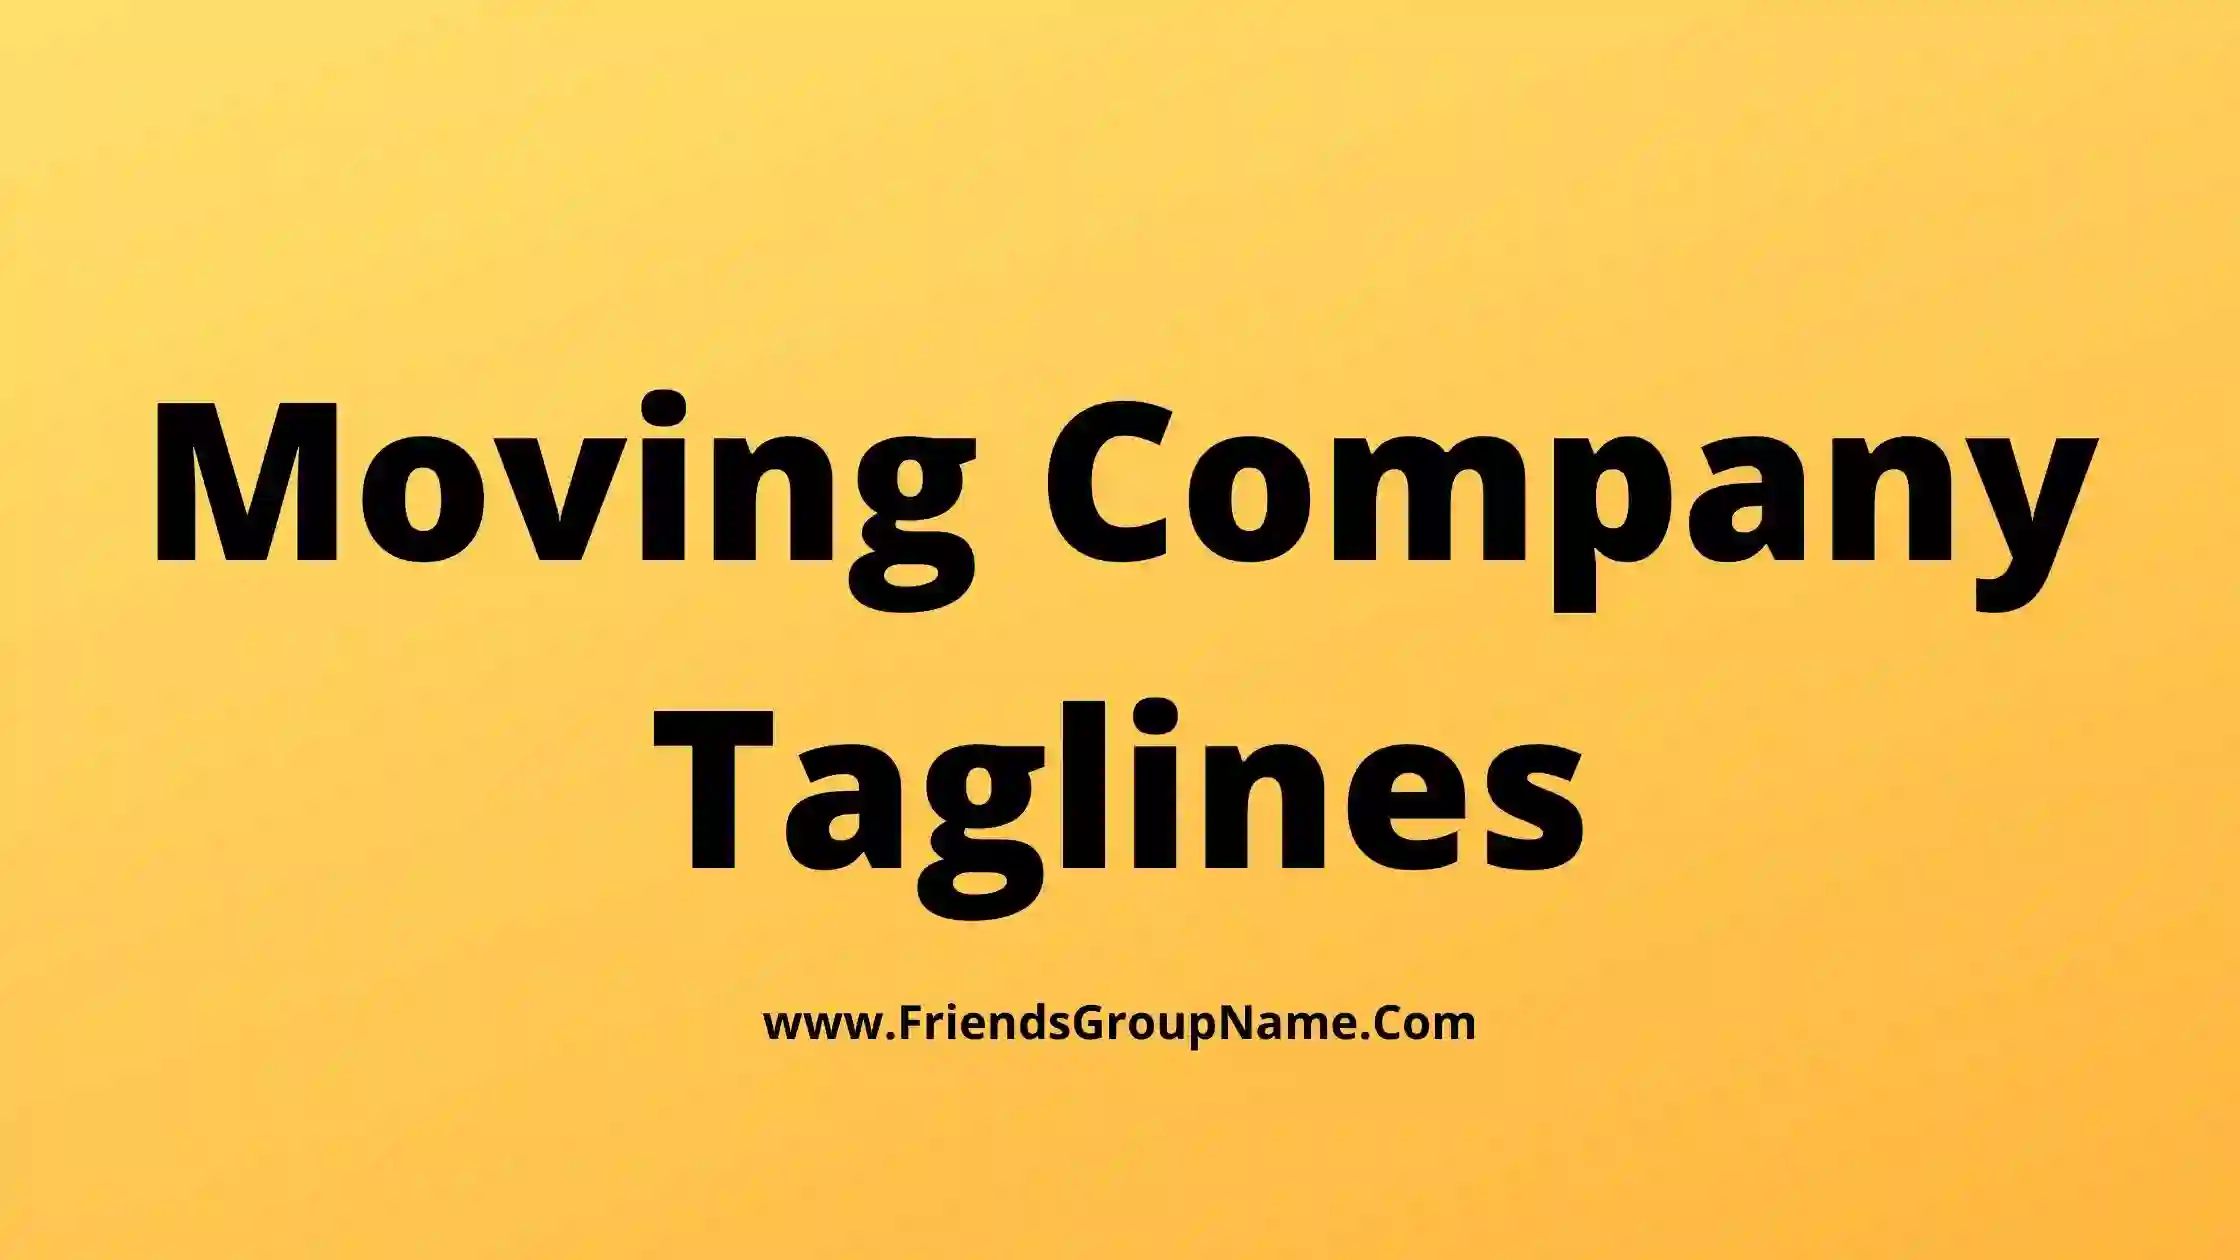 Moving Company Taglines